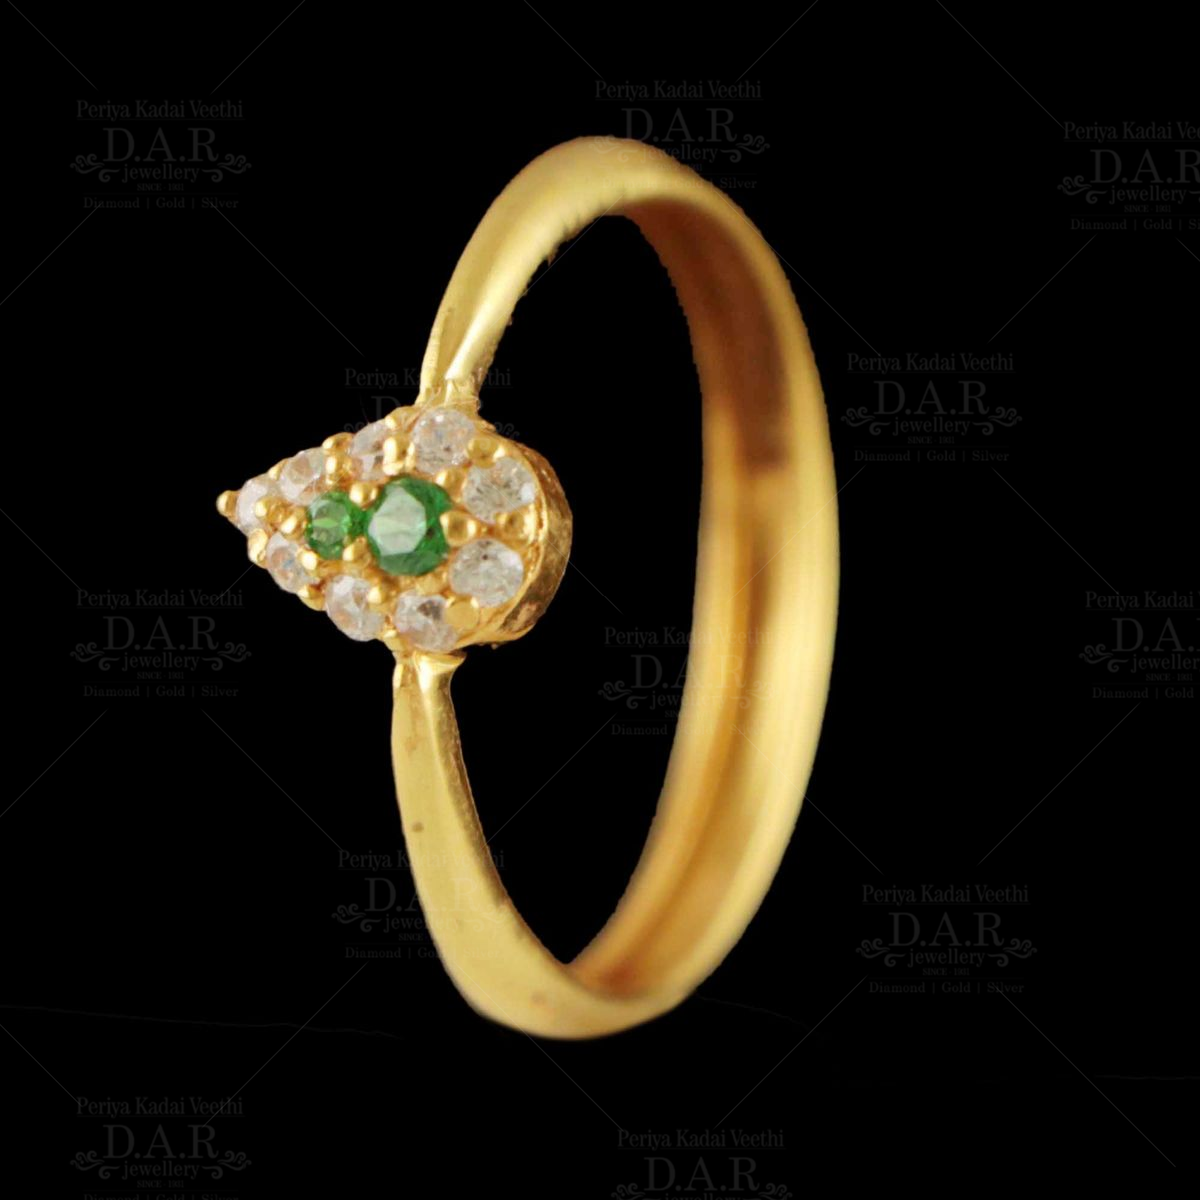 Buy quality 22karat gold ring for women in Pune